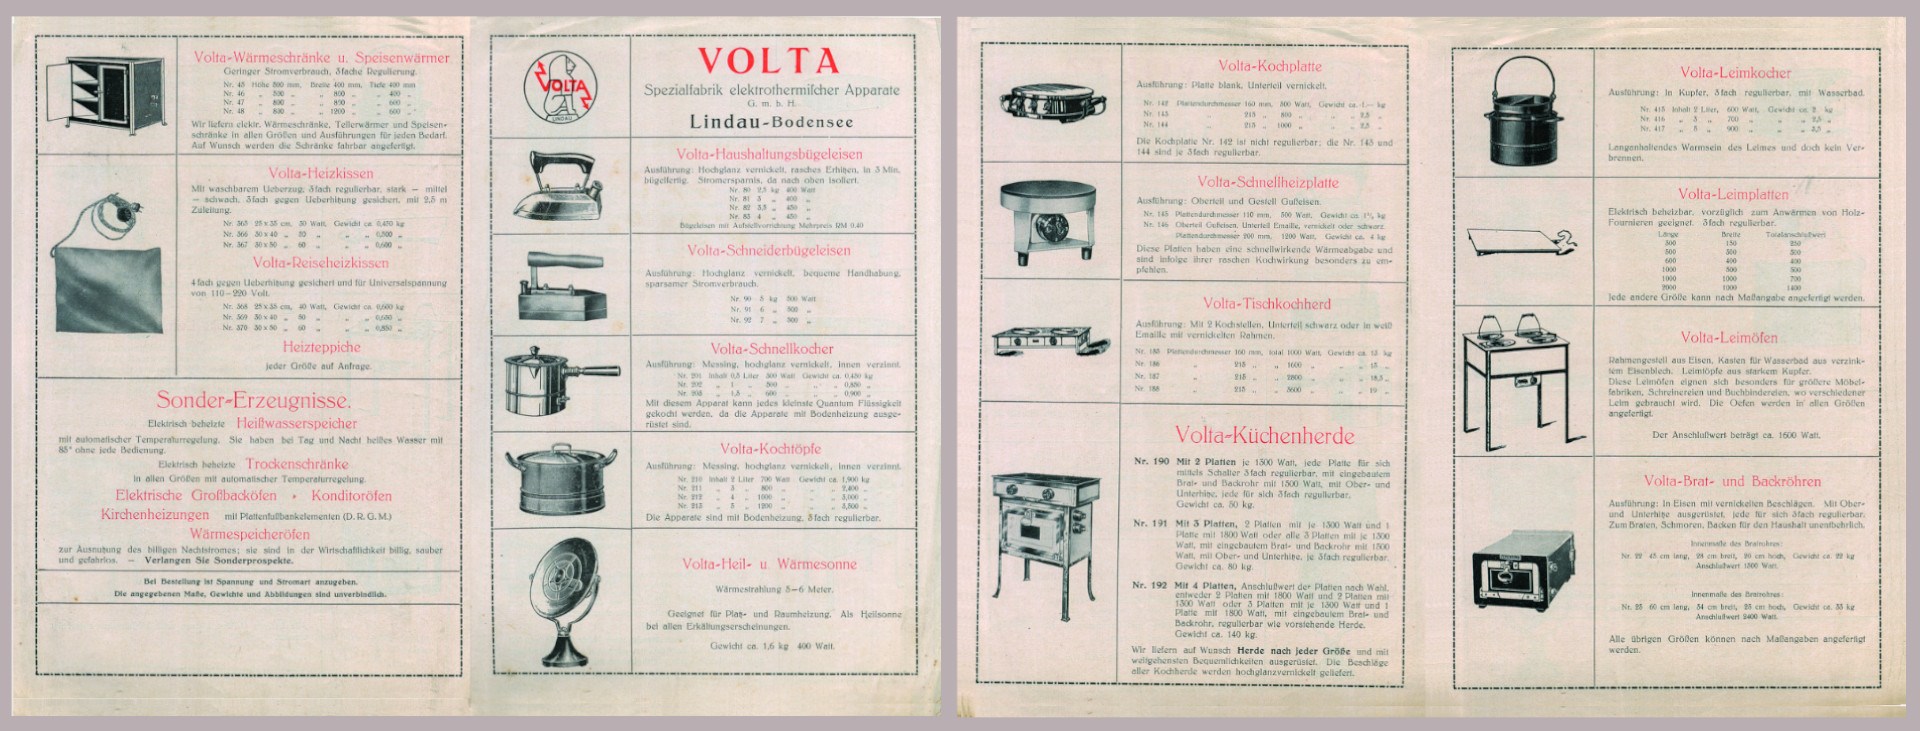 Volta-electric-heating